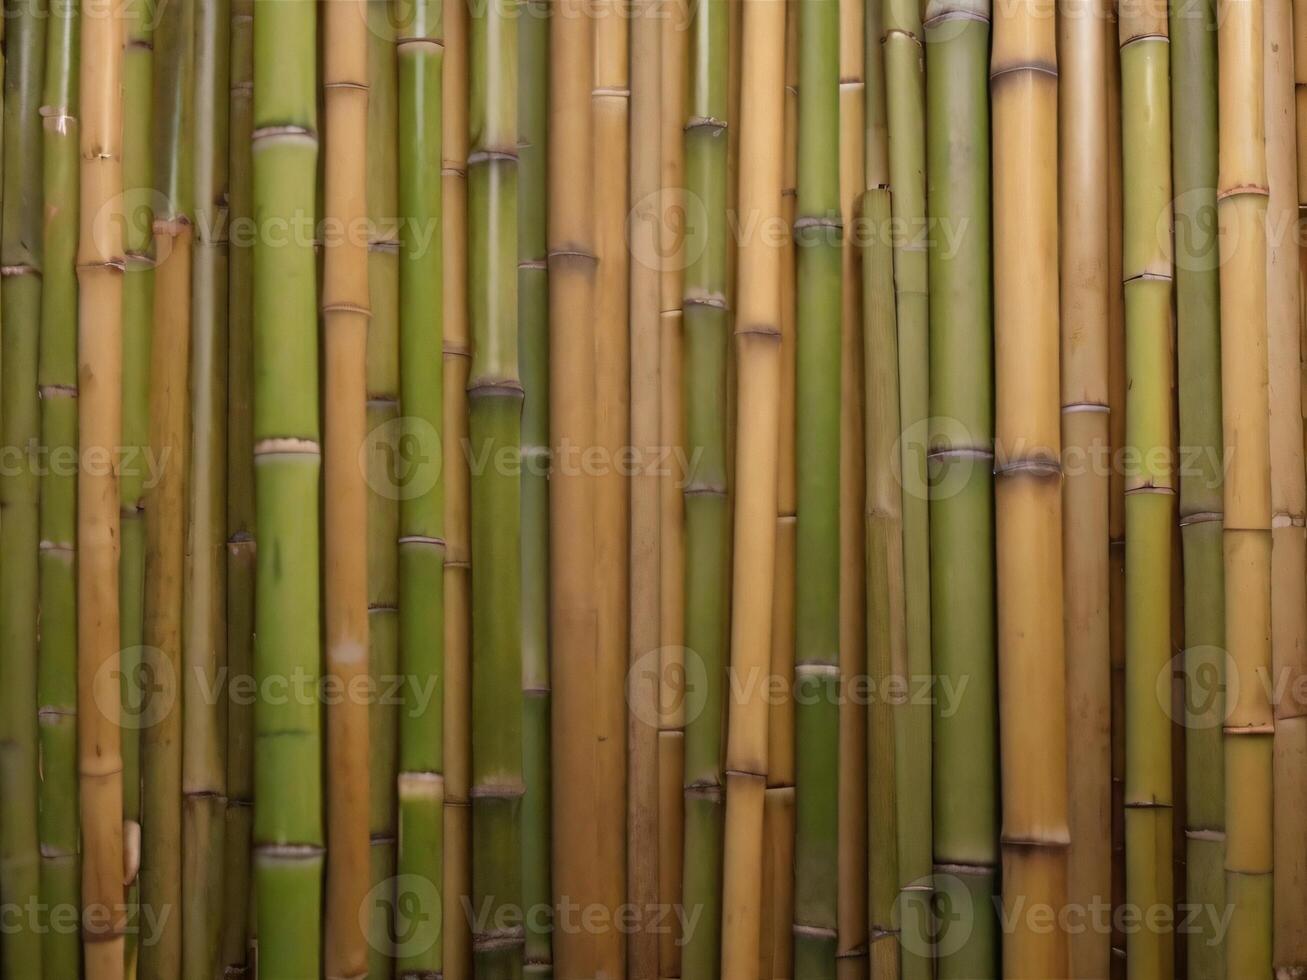 ai generato giallo e verde bambù struttura. bambù parete o recinto sfondo foto